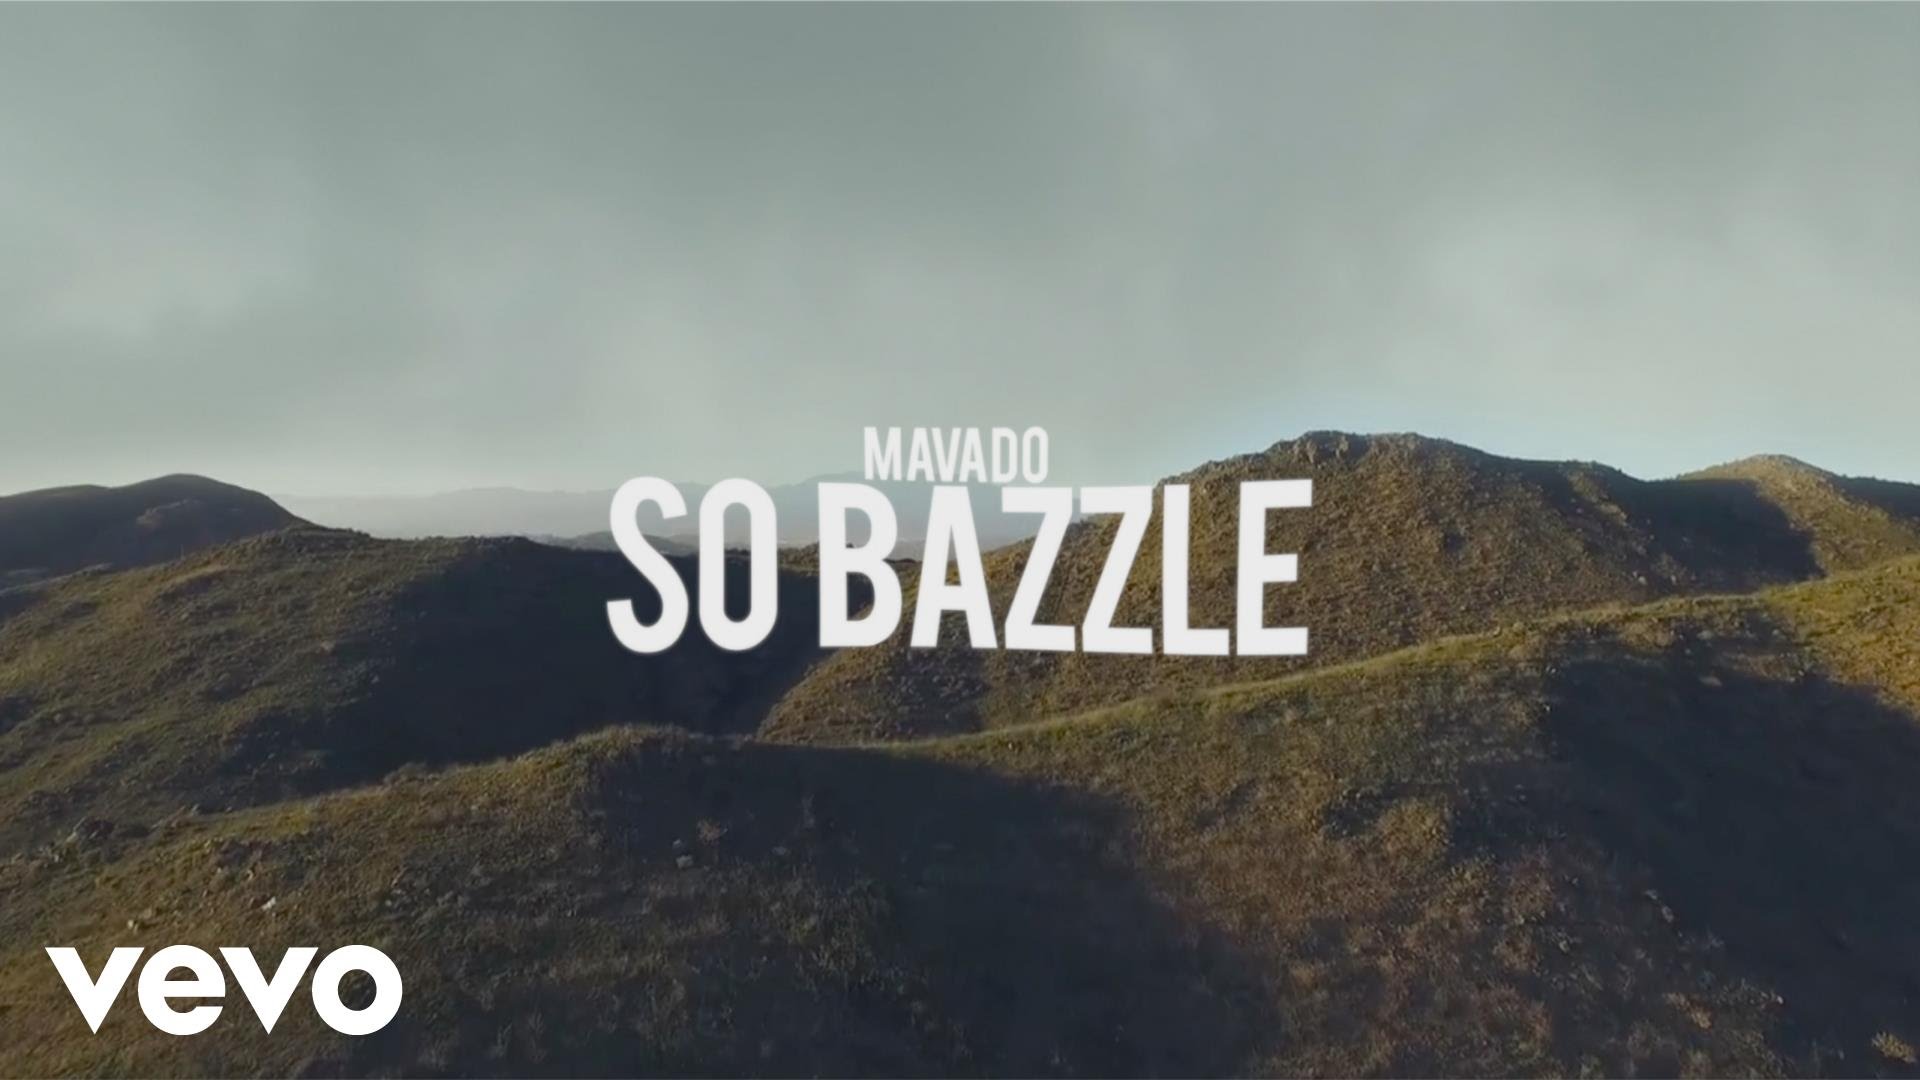 Mavado – So Bazzel (Music Video)